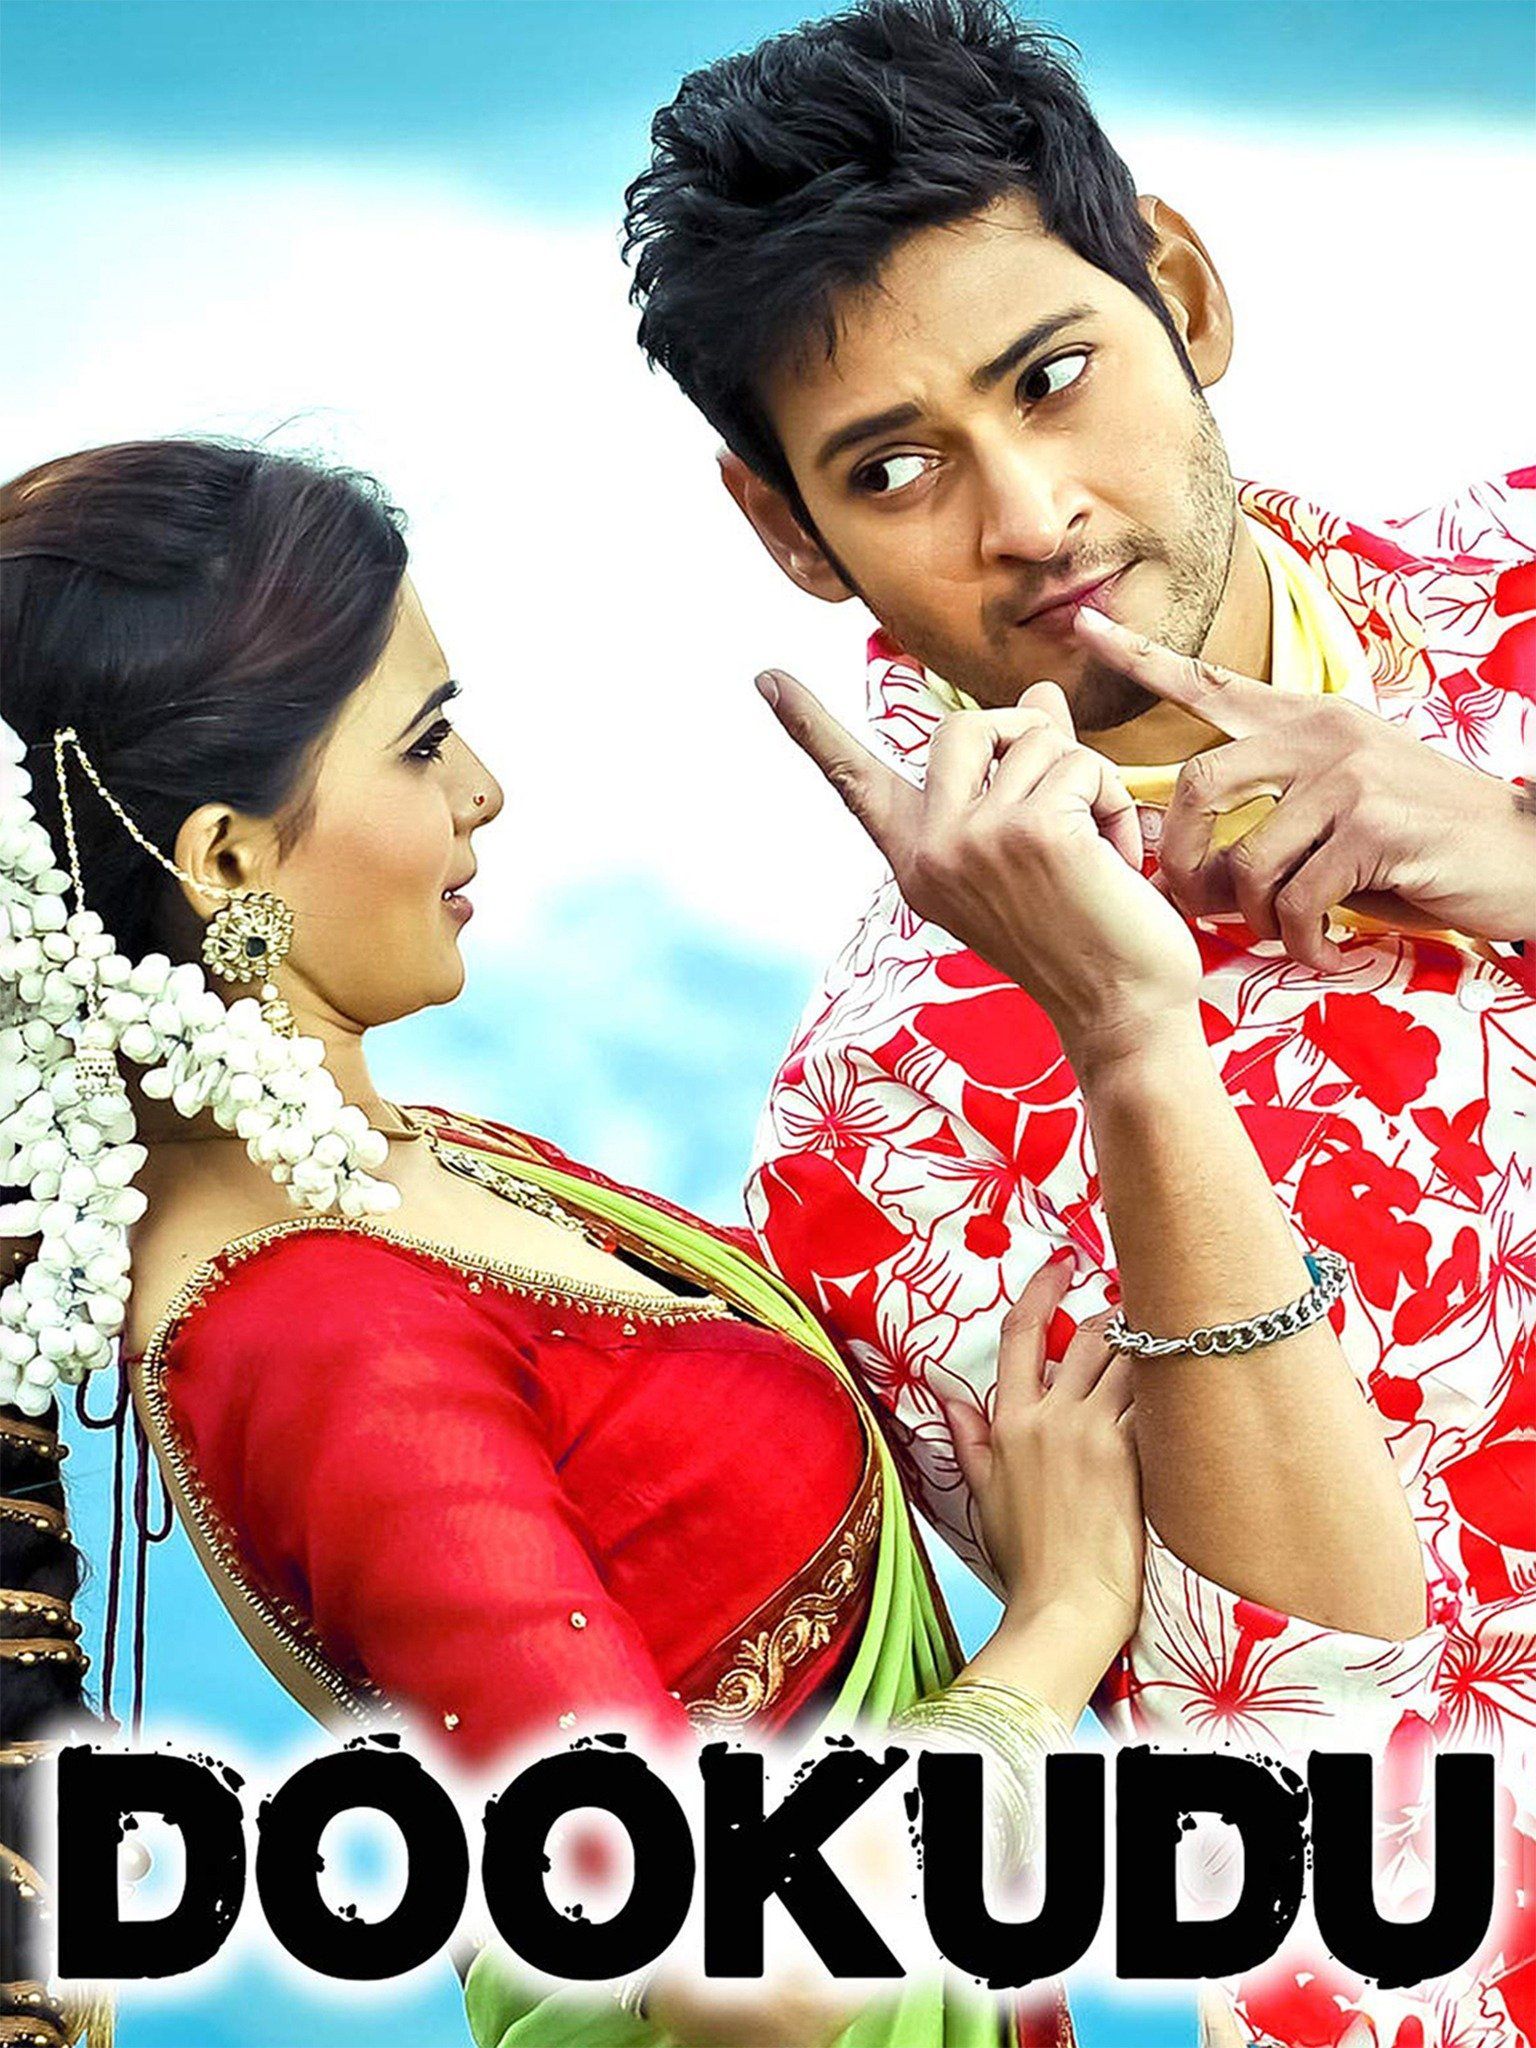 Dookudu (2011) Hindi Dubbed HDRip download full movie